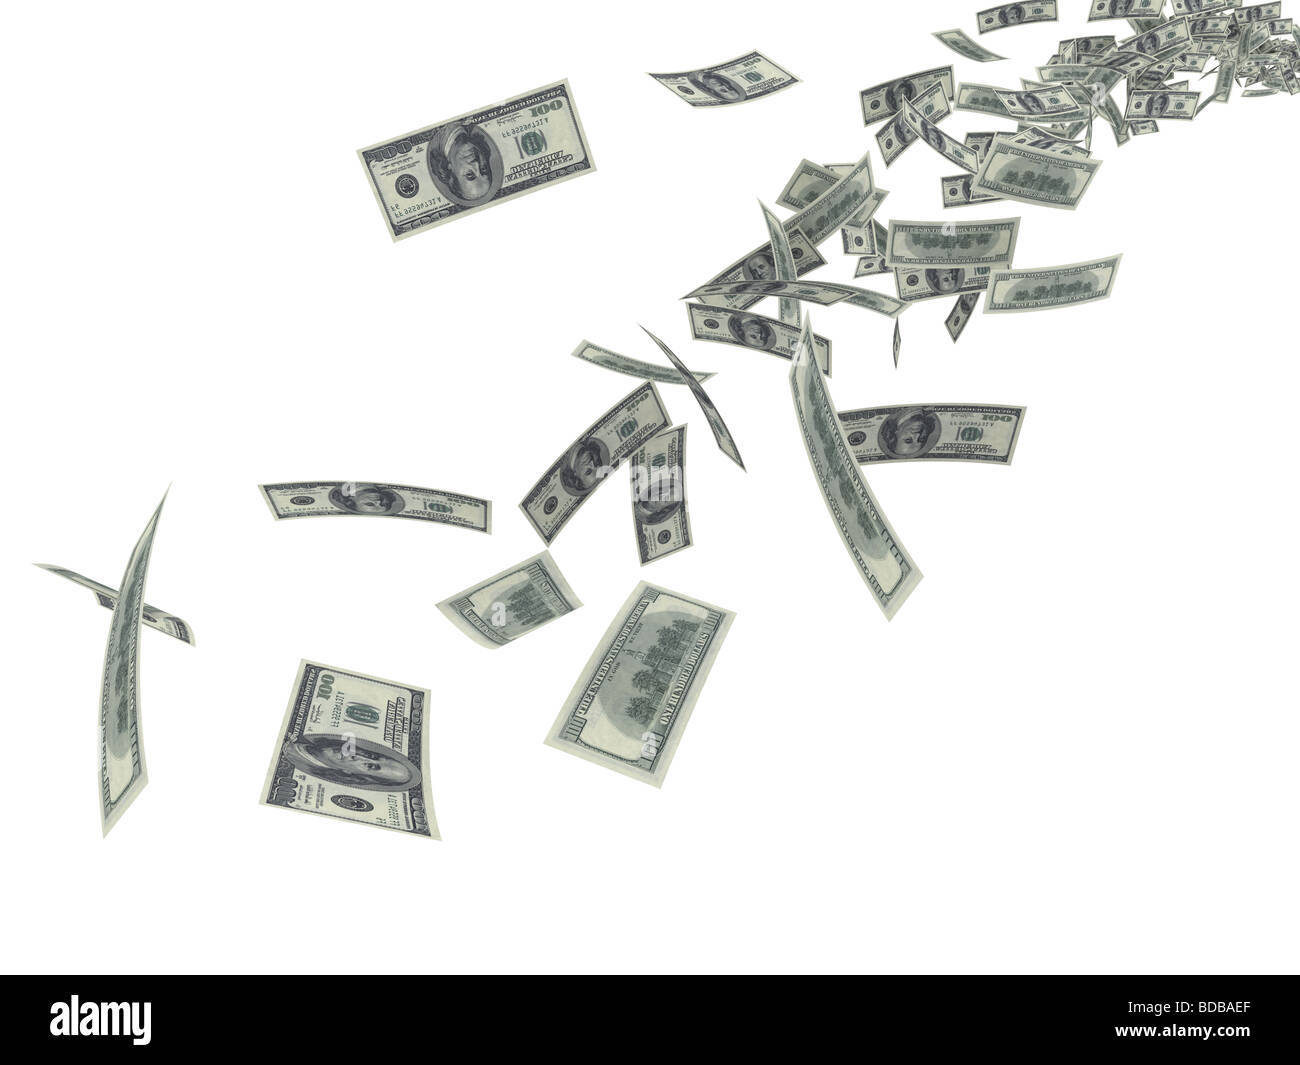 Money (bank notes) falling Stock Photo Alamy